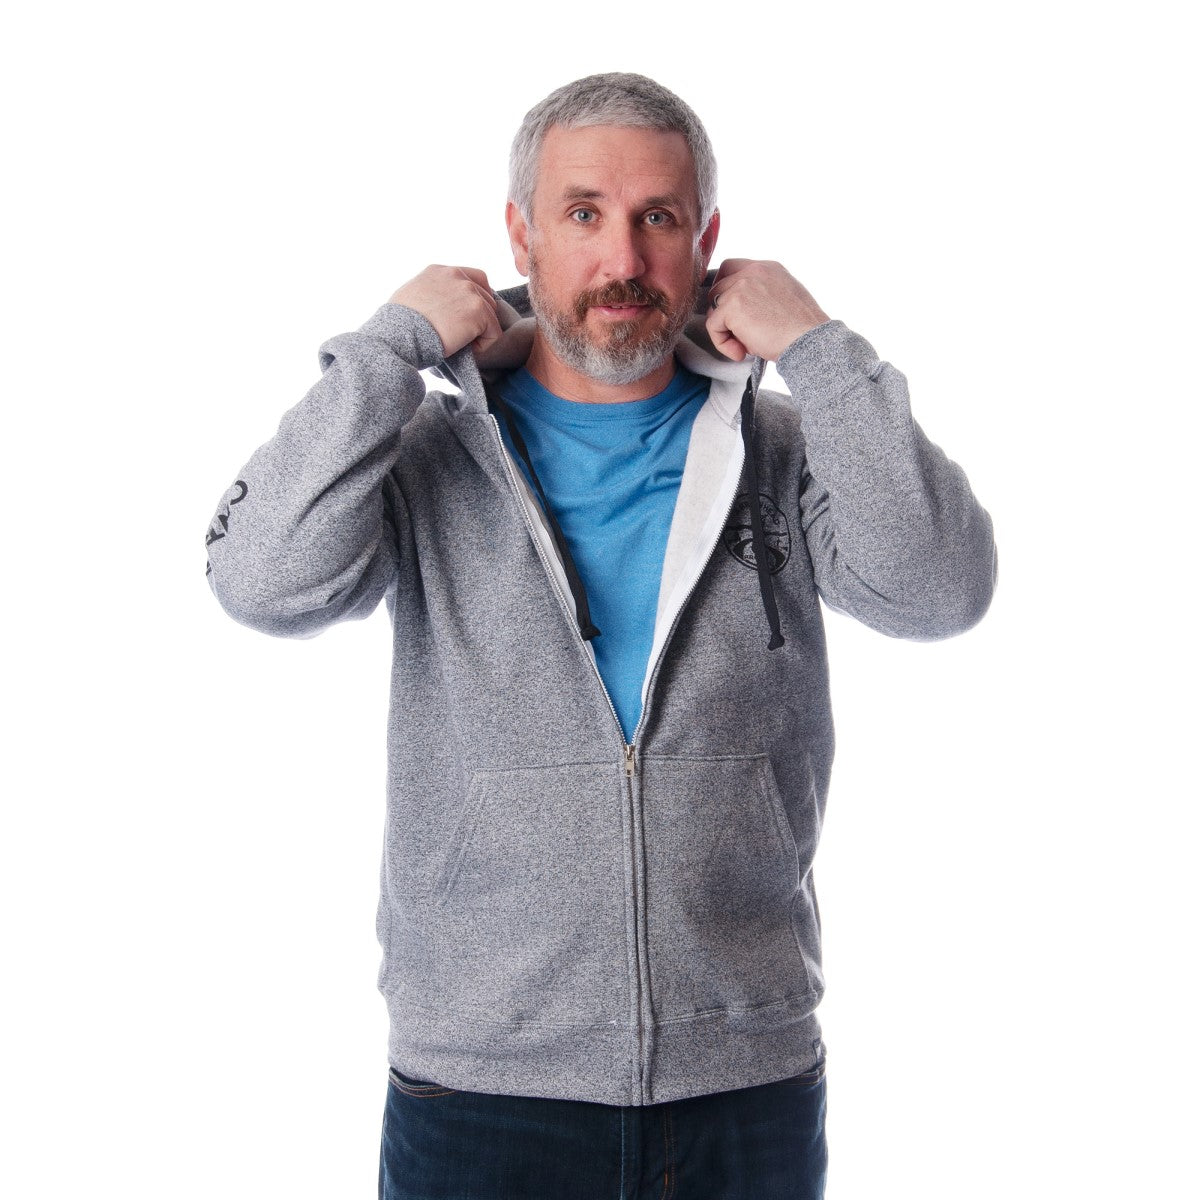 Male wearing Unisex Park Specific Grey Zip-up hoody (front). Black Arrowhead park crest imprint on left chest.